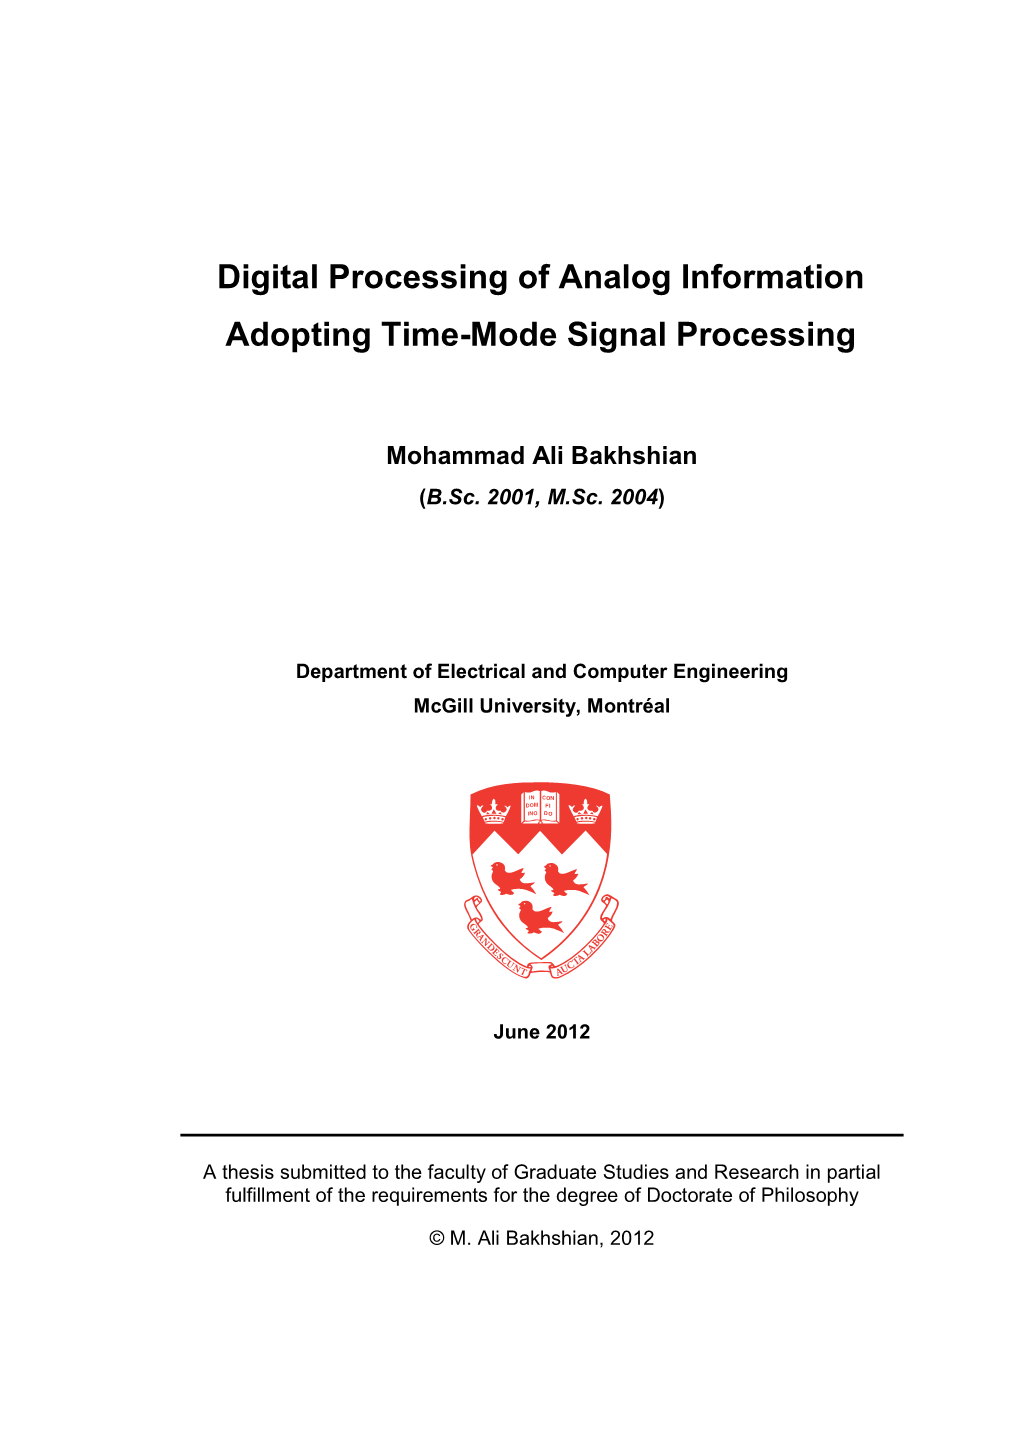 Digital Processing of Analog Information Adopting Time-Mode Signal Processing